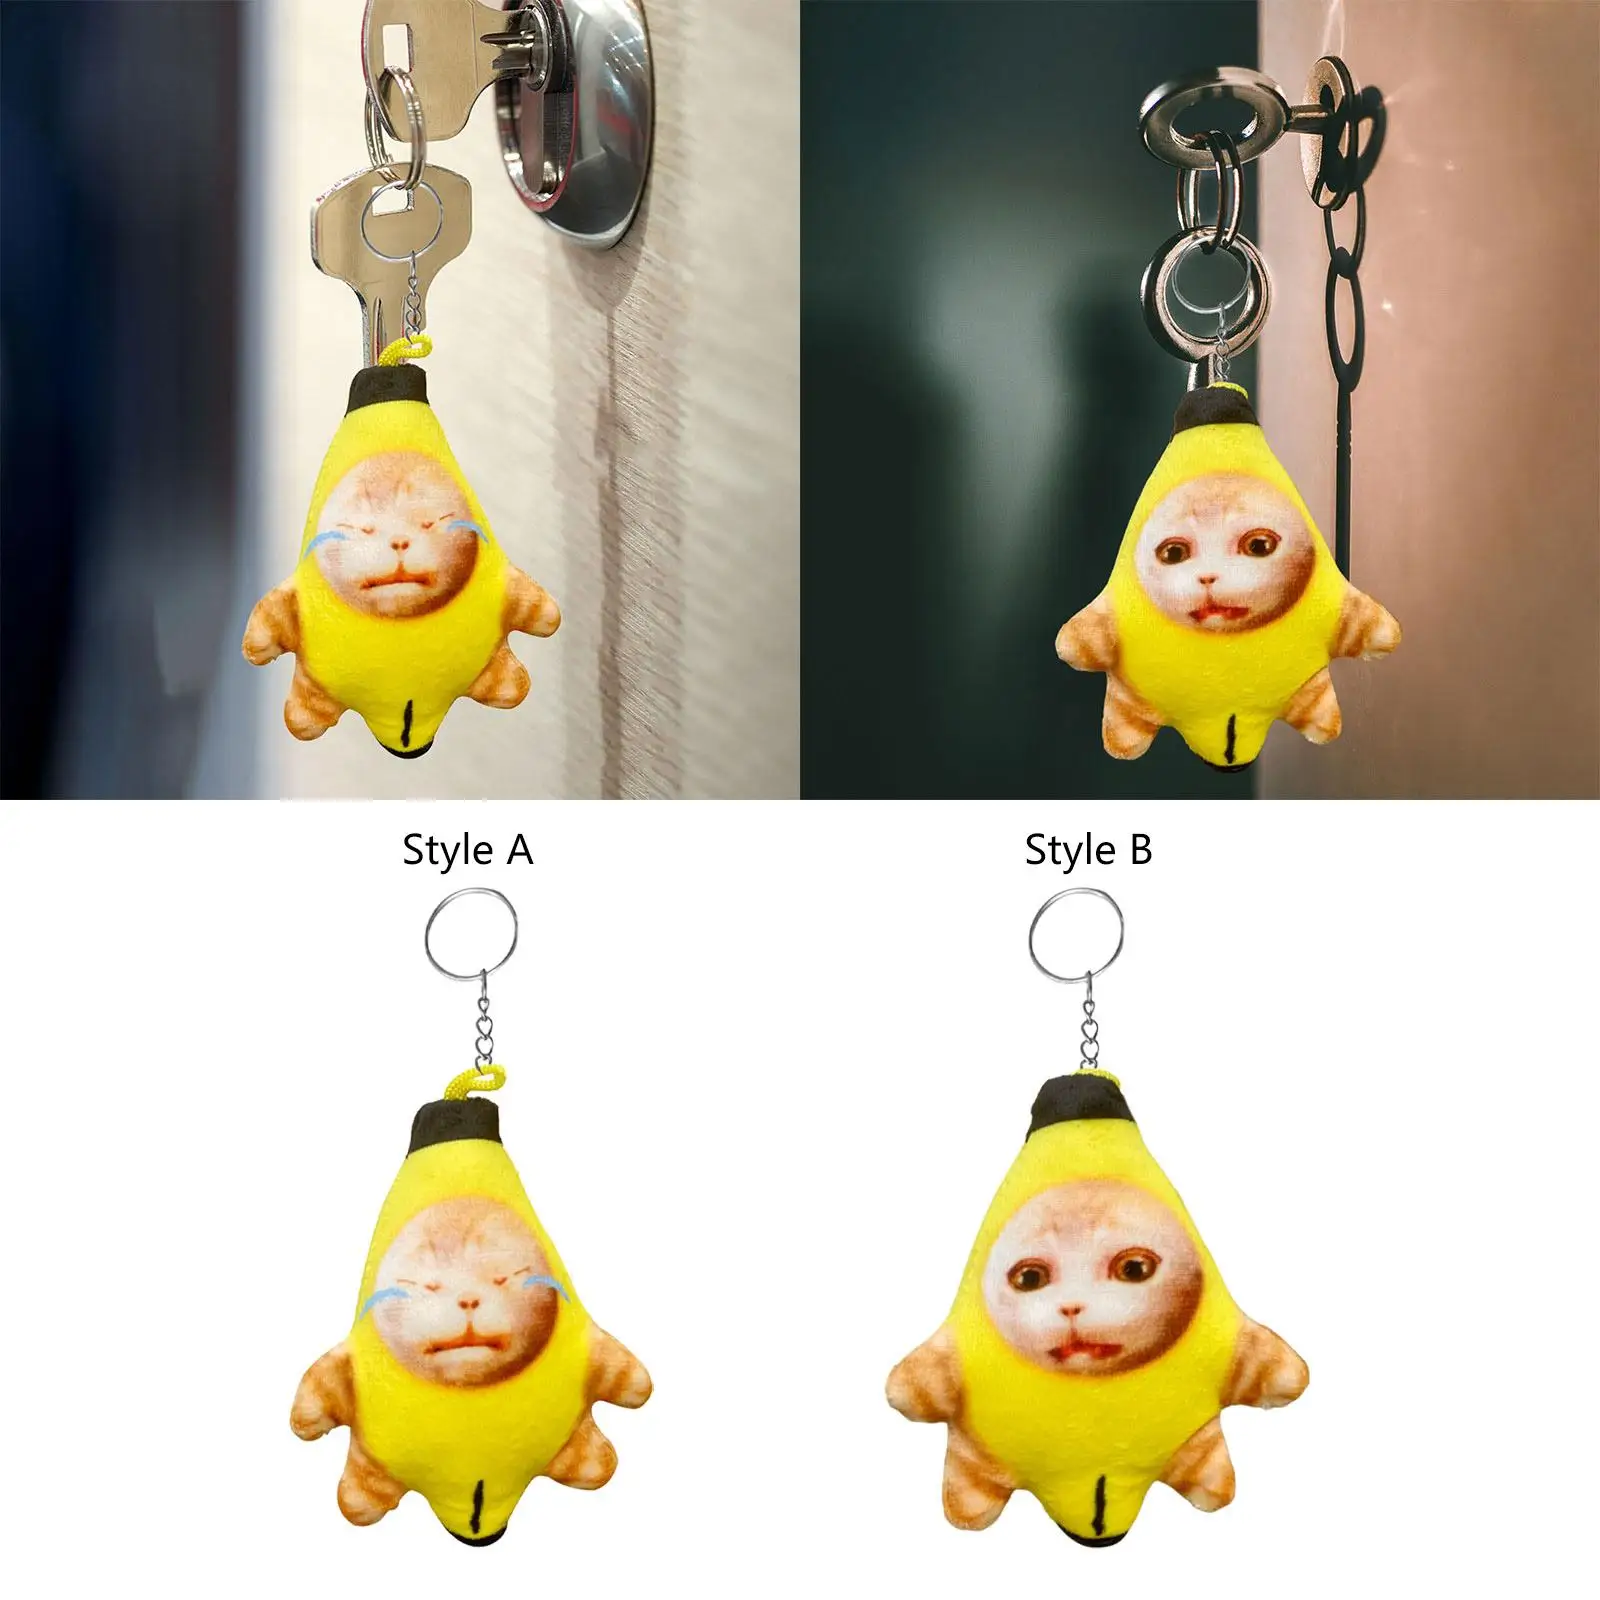 Banana Plush Novelty Hanging Adorable Banana Plush Doll Keychain with Sound for Party Favor Purse Handbag Backpack Adults